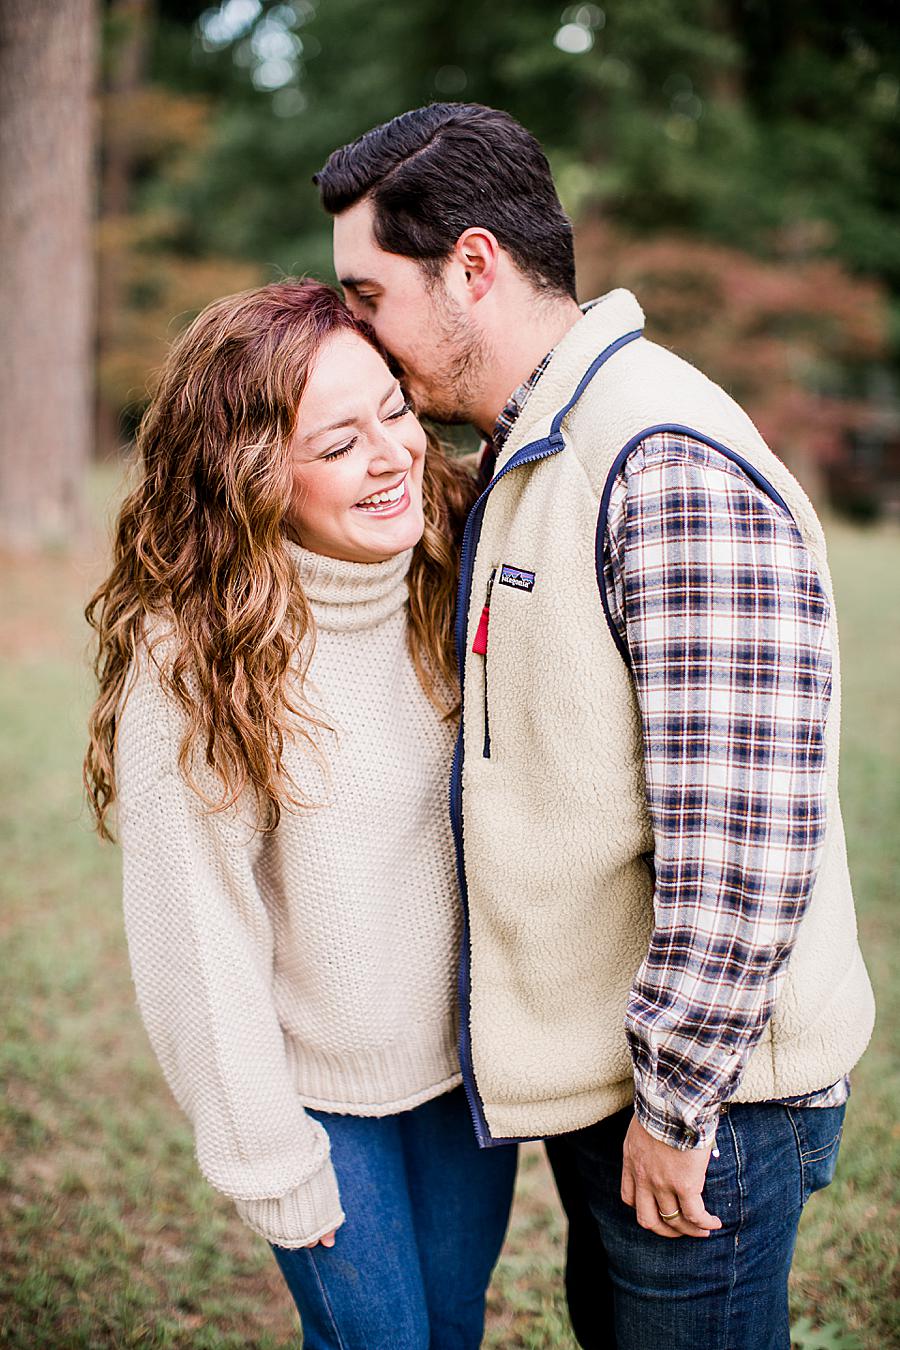 Turtleneck sweater by Knoxville Wedding Photographer, Amanda May Photos.